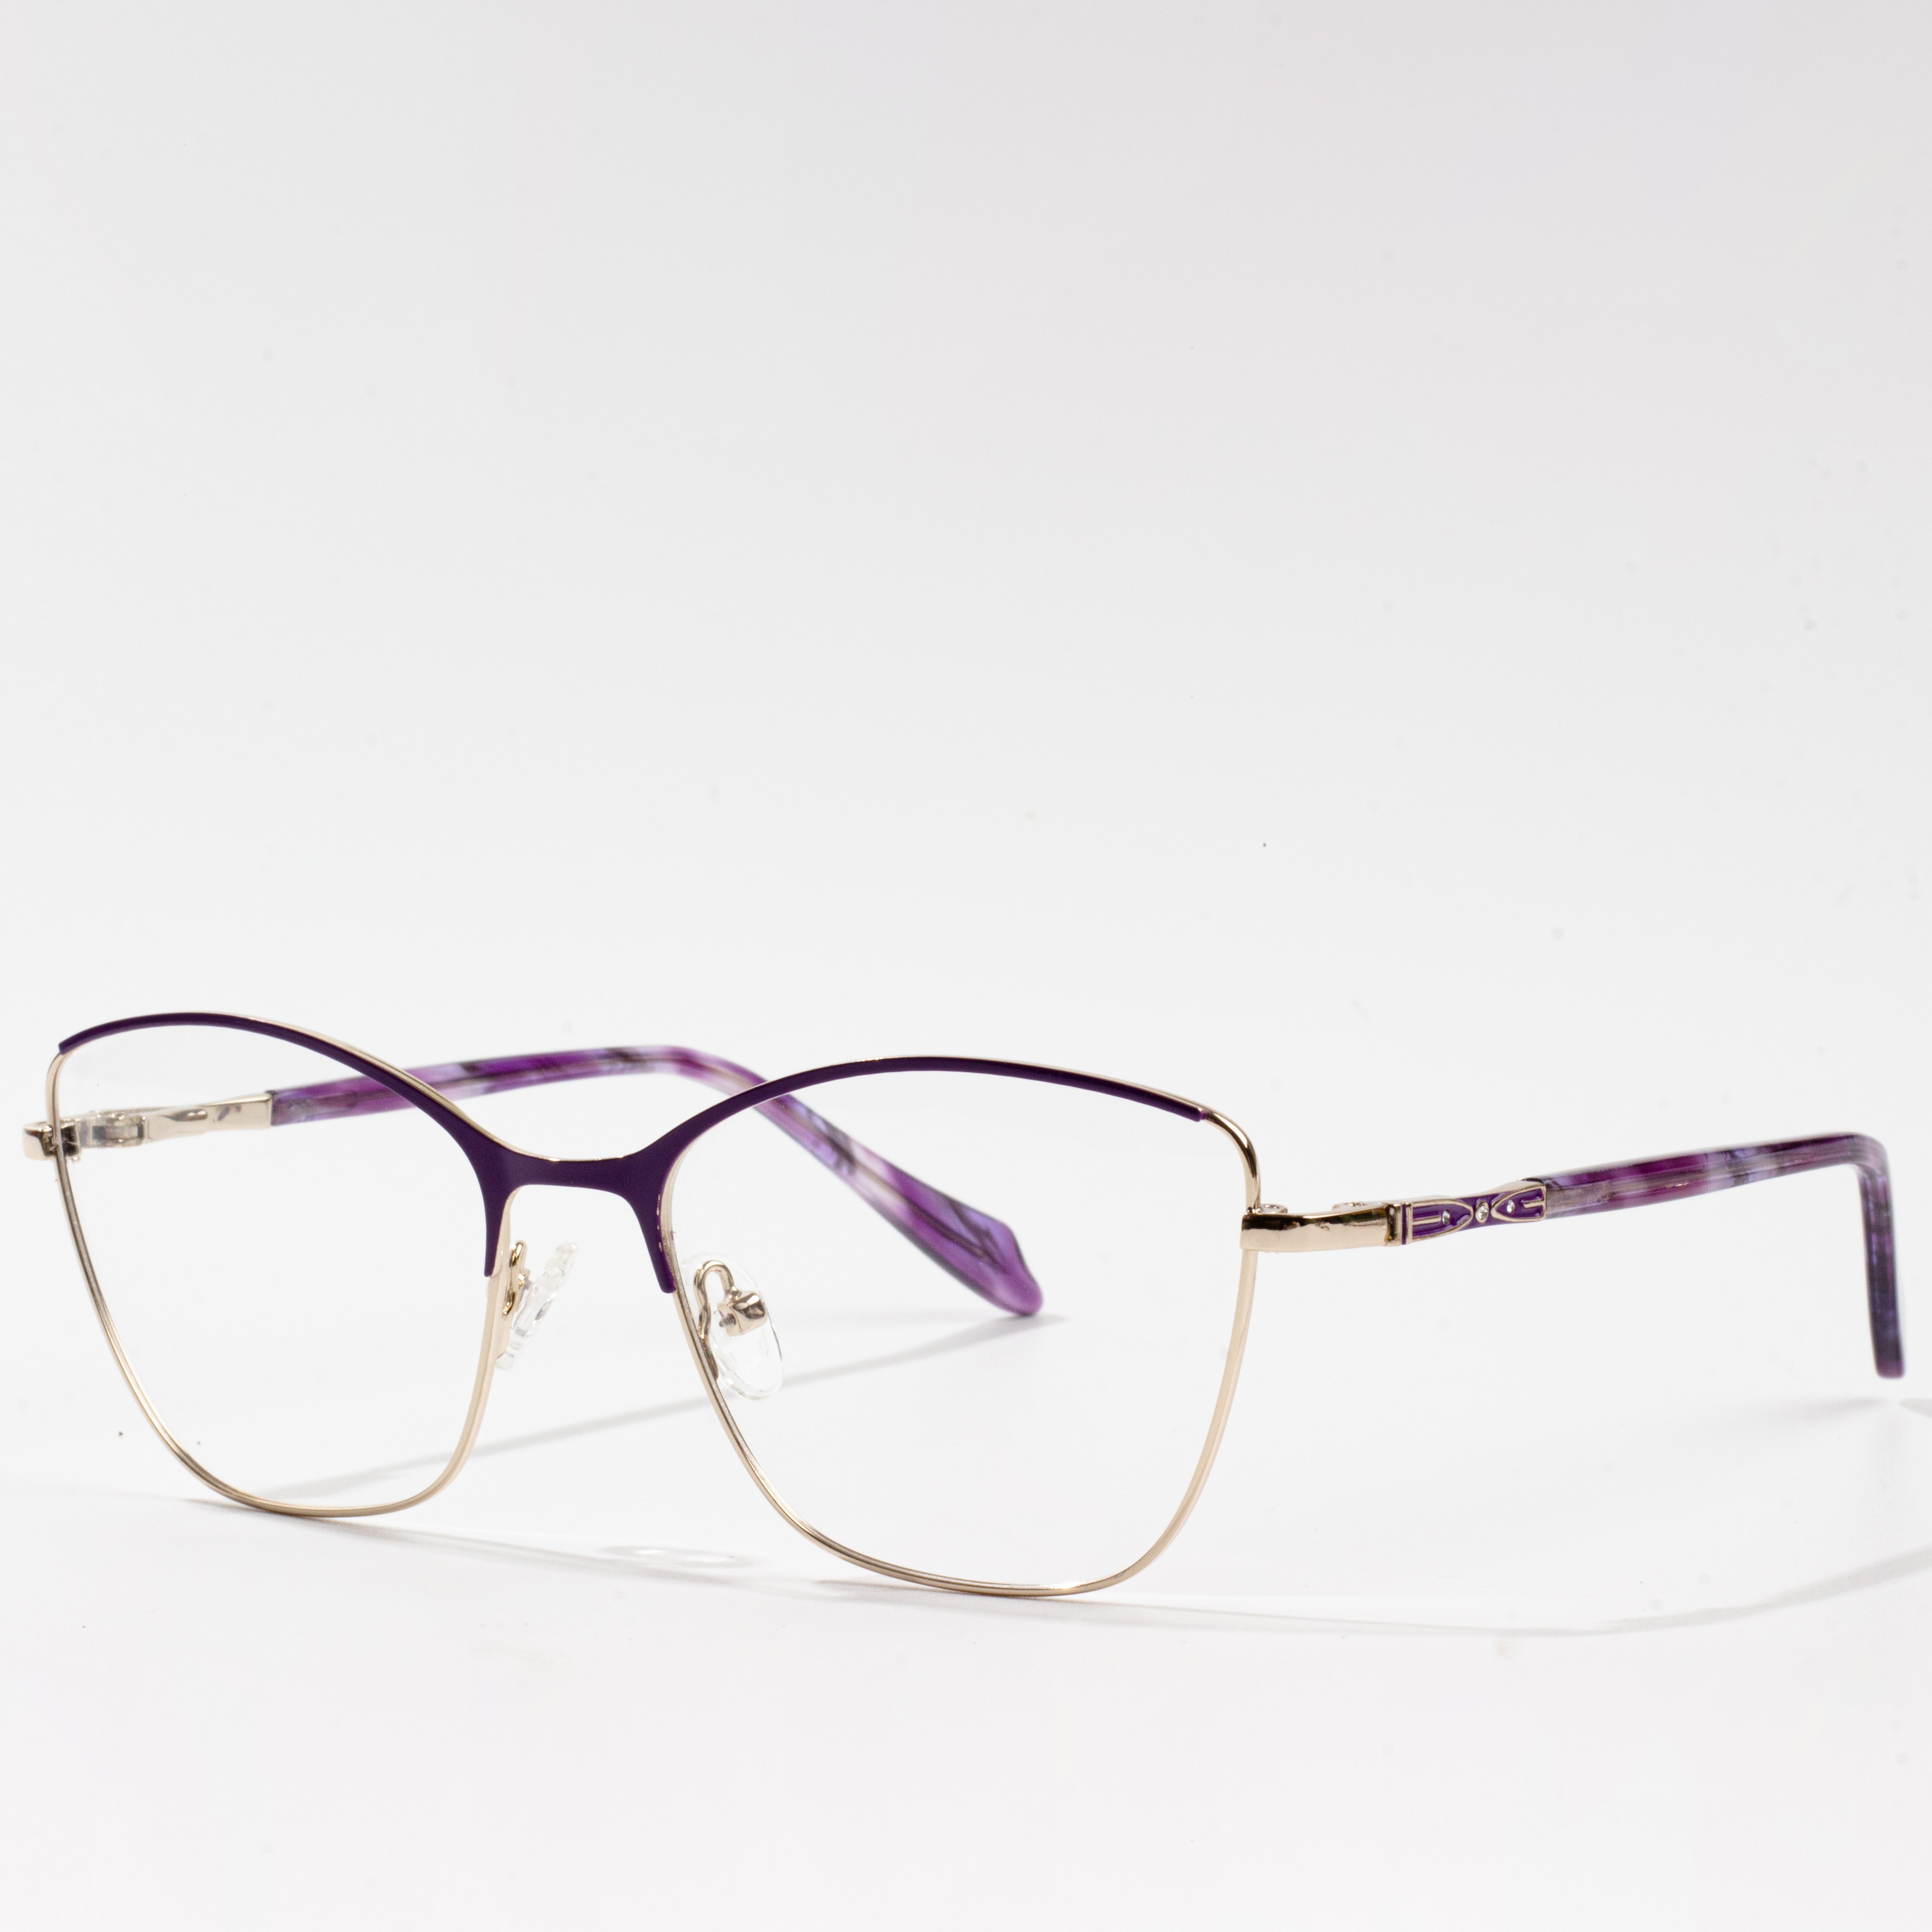 eyeglass frames sale